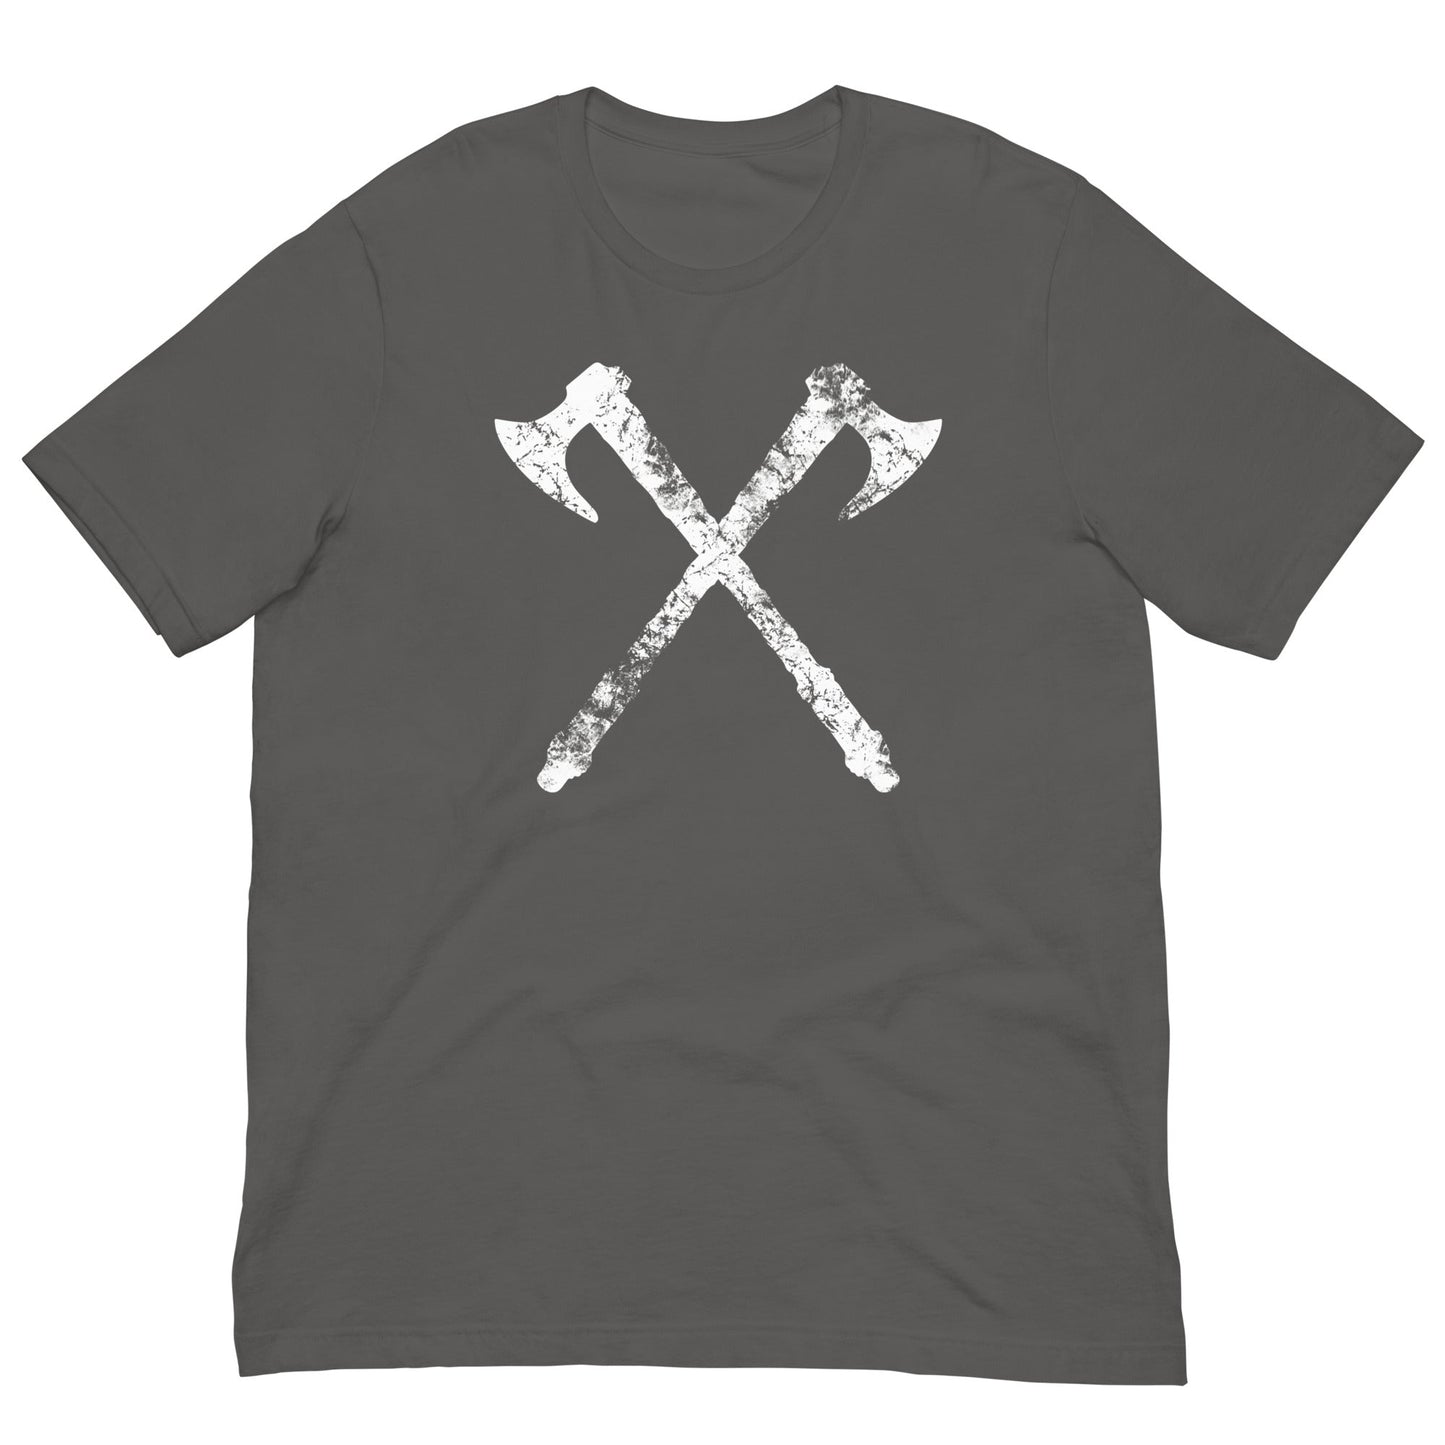 Scar Design Asphalt / S Vintage Viking Axes T-shirt